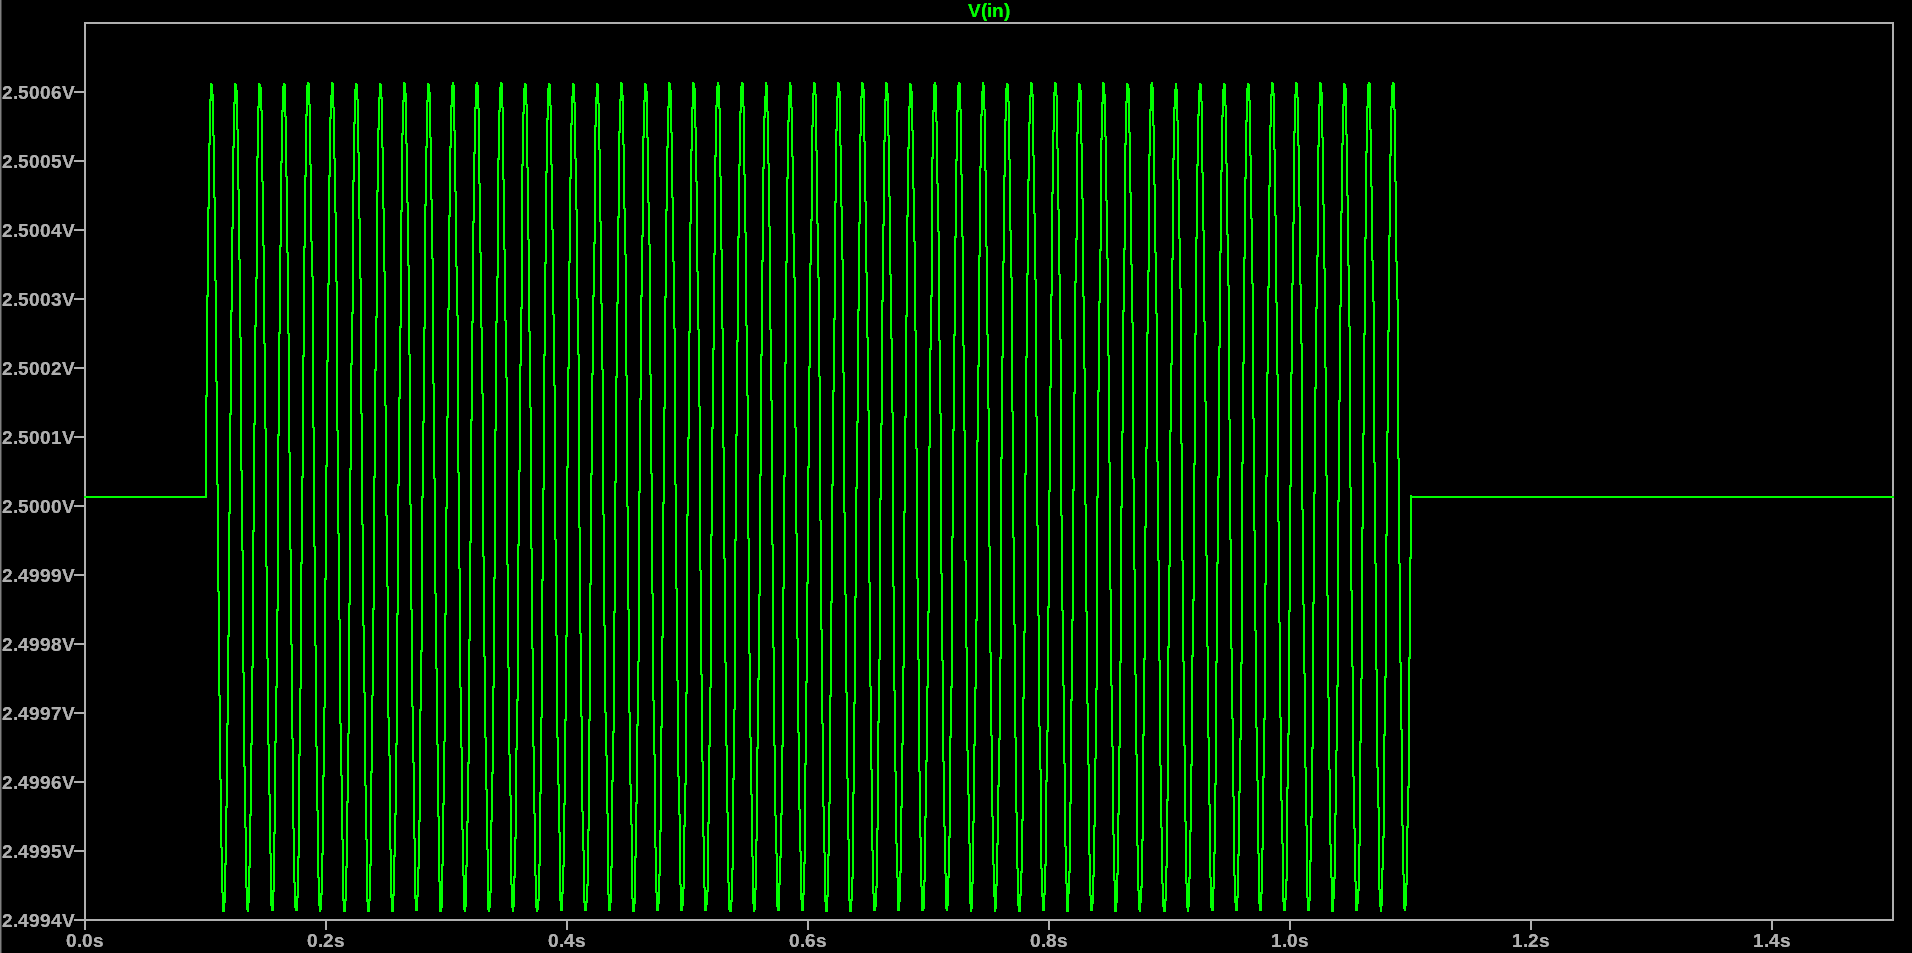 Simulated Rogoswki coil voltage signal